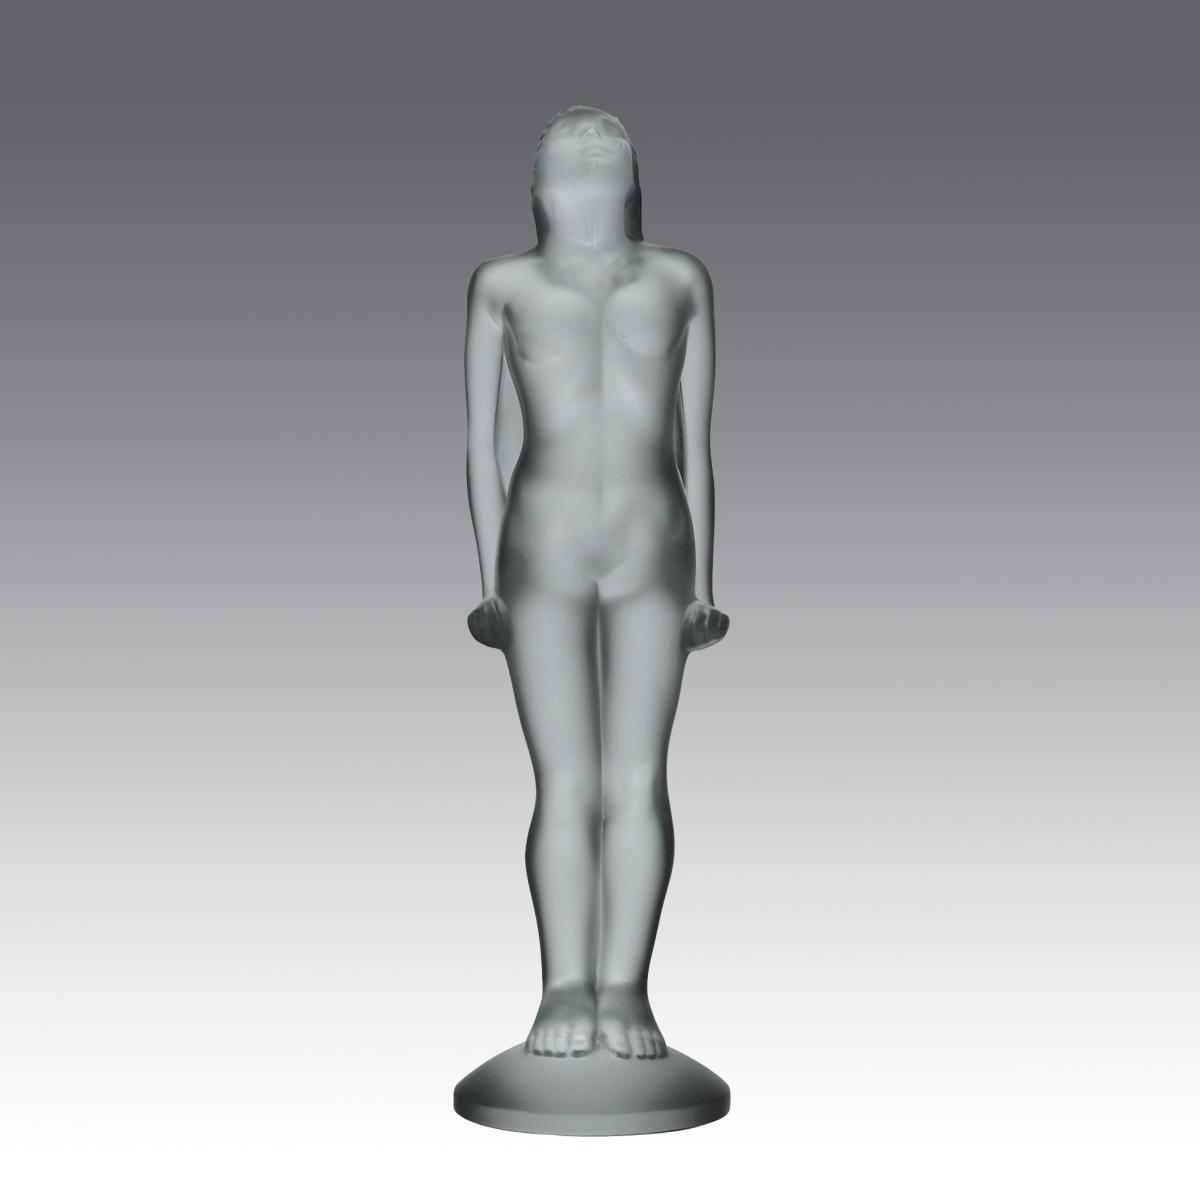 20th Century Glass Car Mascot entitled "Femme Car Mascot" by Marc Lalique